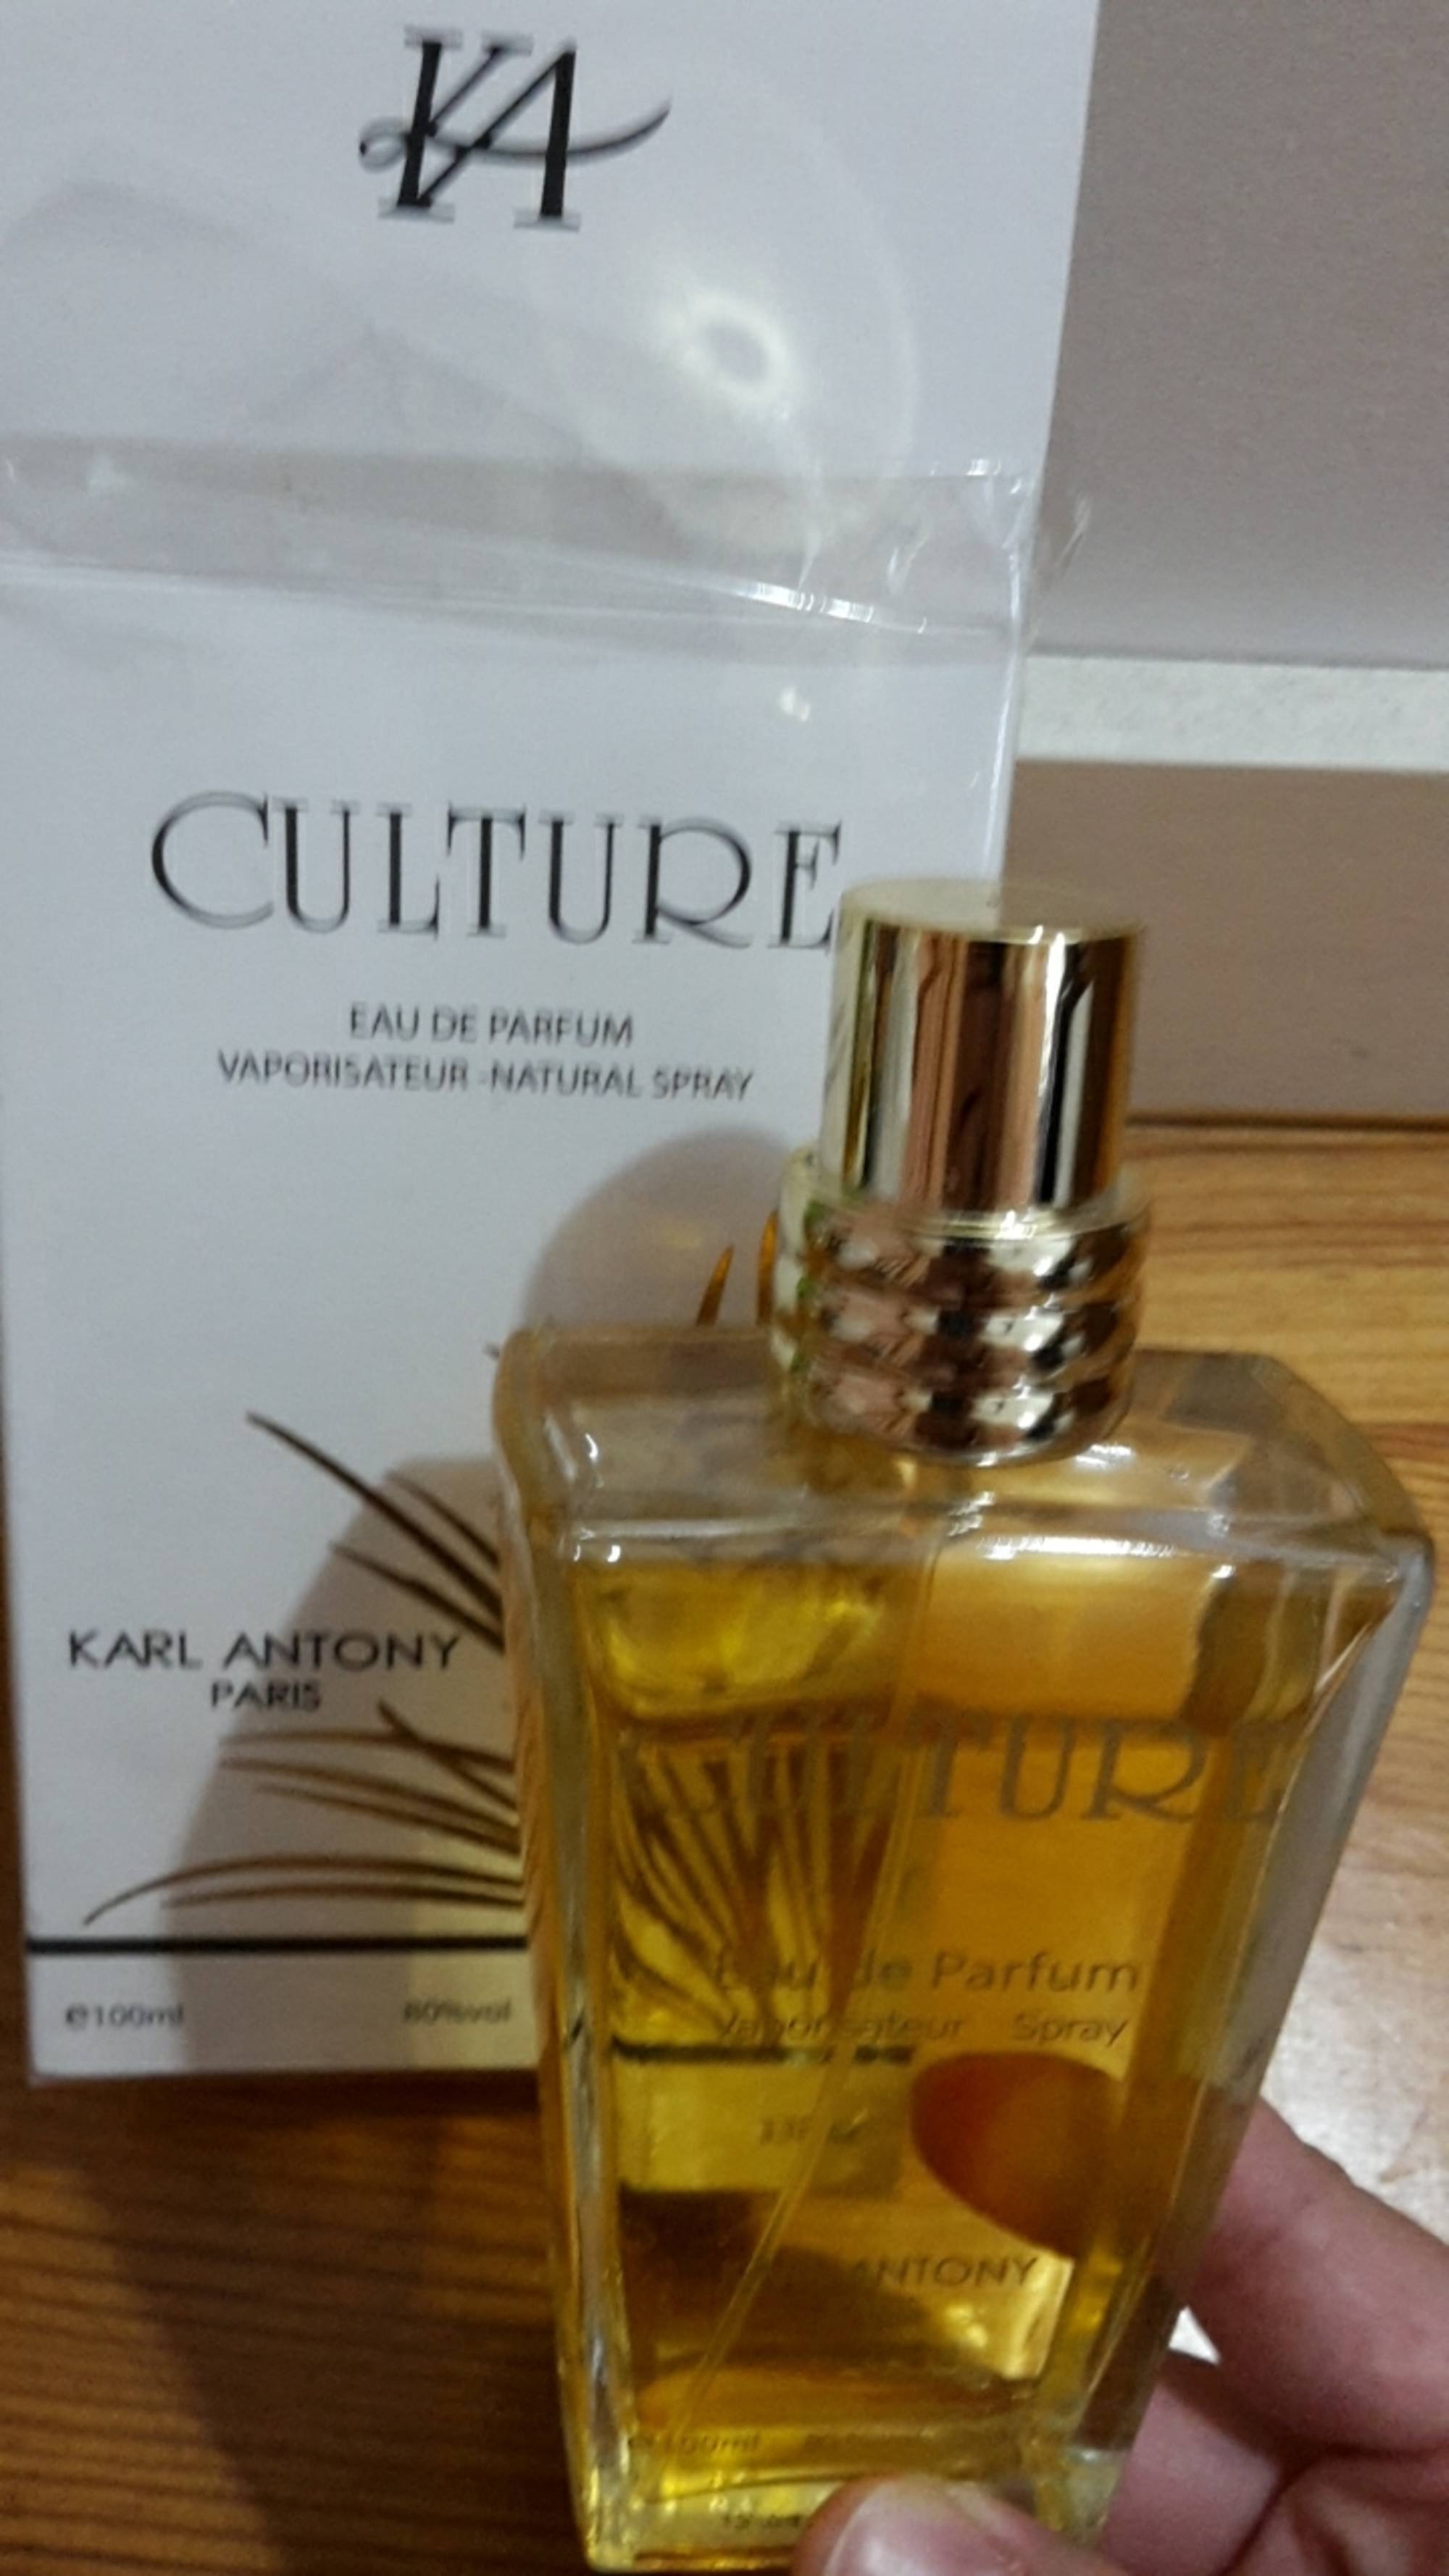 KARL ANTONY - Culture - Eau de parfum 